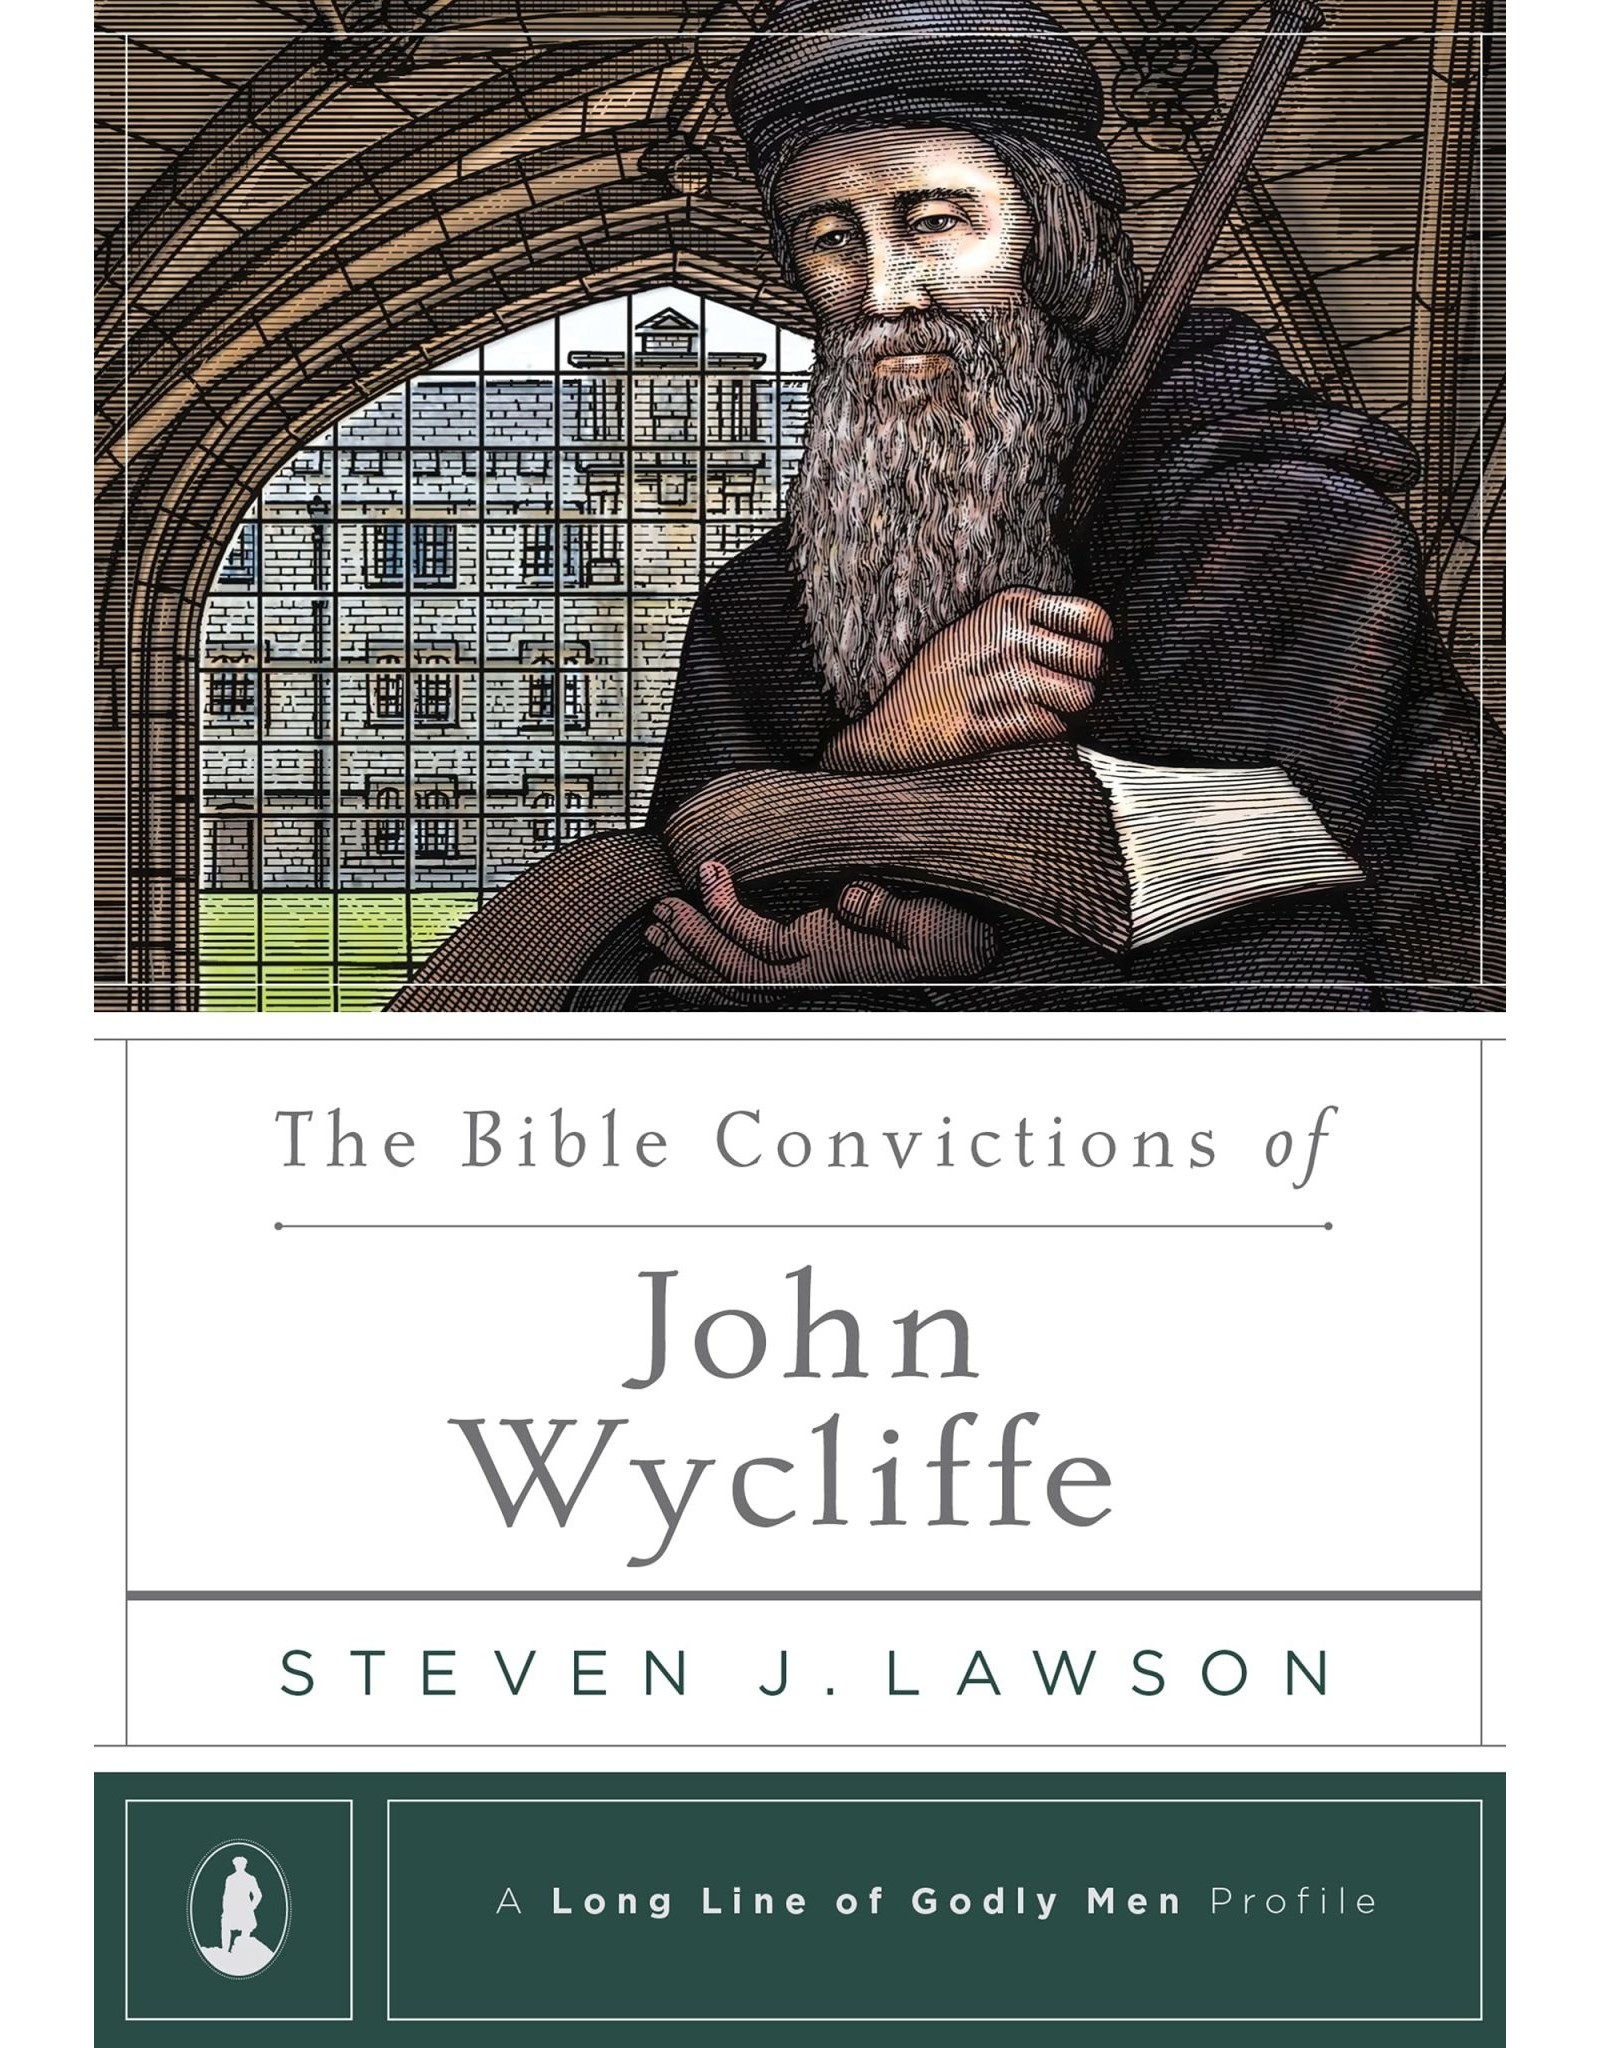 Ligonier / Reformation Trust OP: The Bible Convictions of John Wycliffe